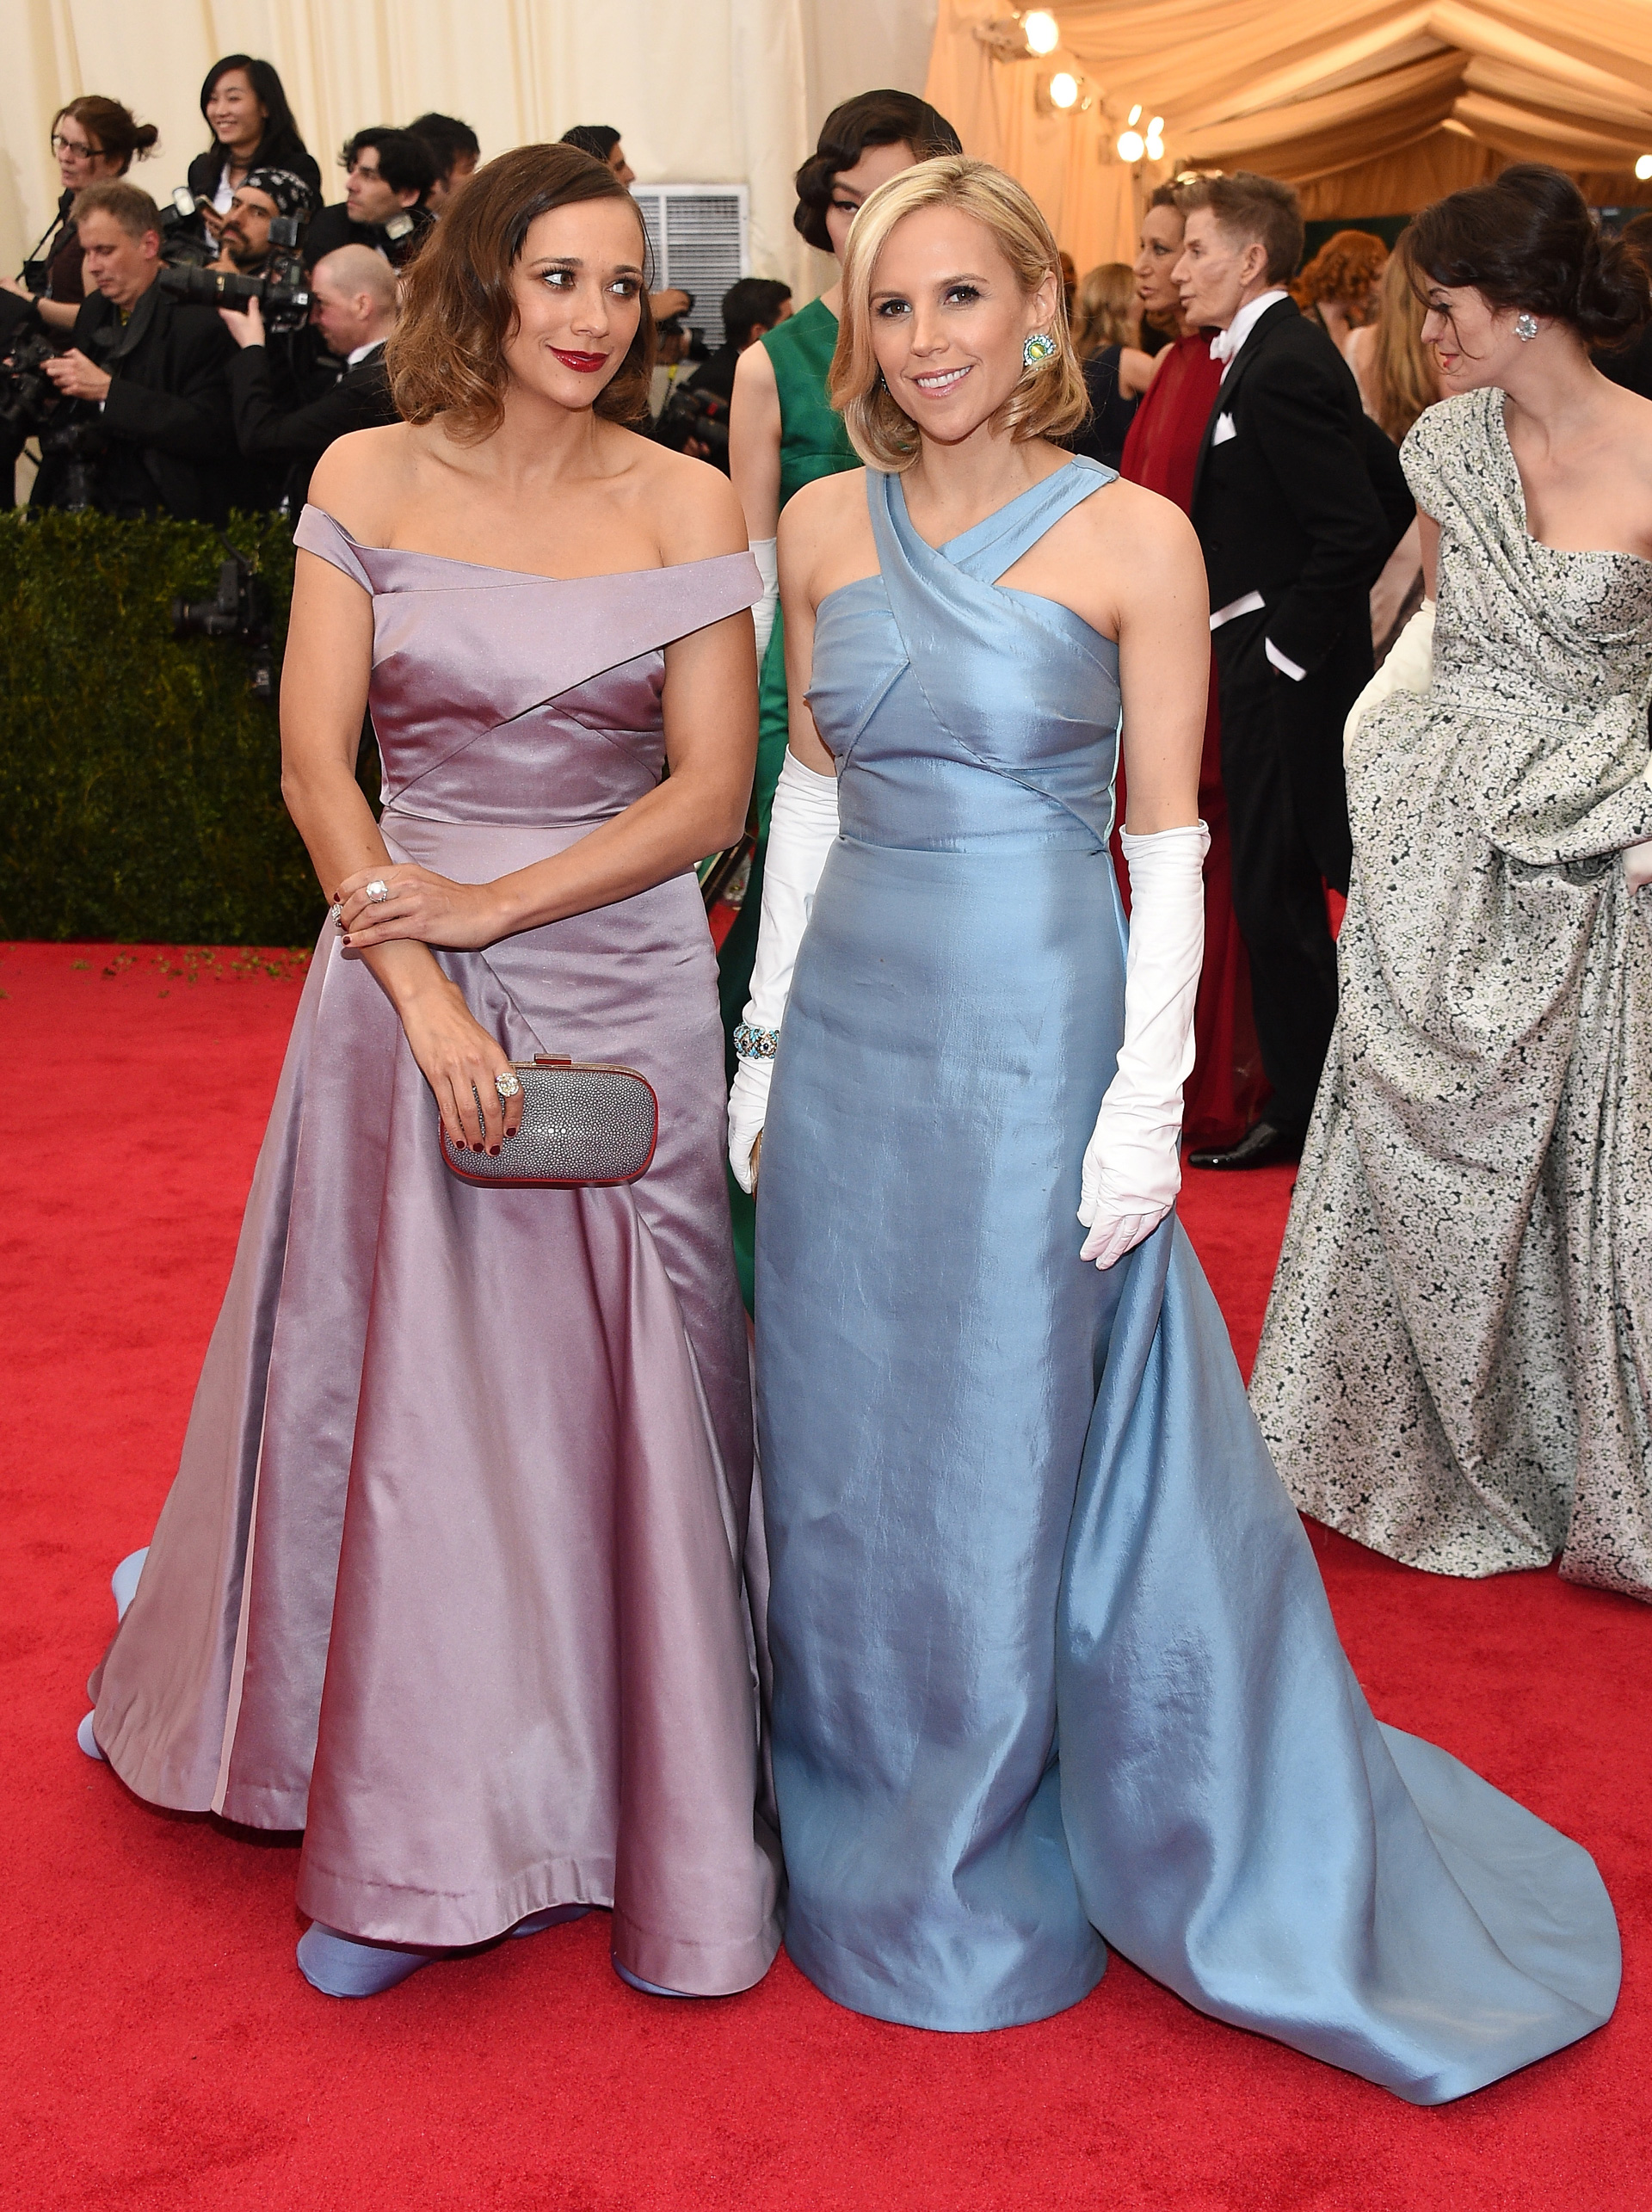 Rashida Jones and Tory Burch as the evil stepsisters in Cinderella